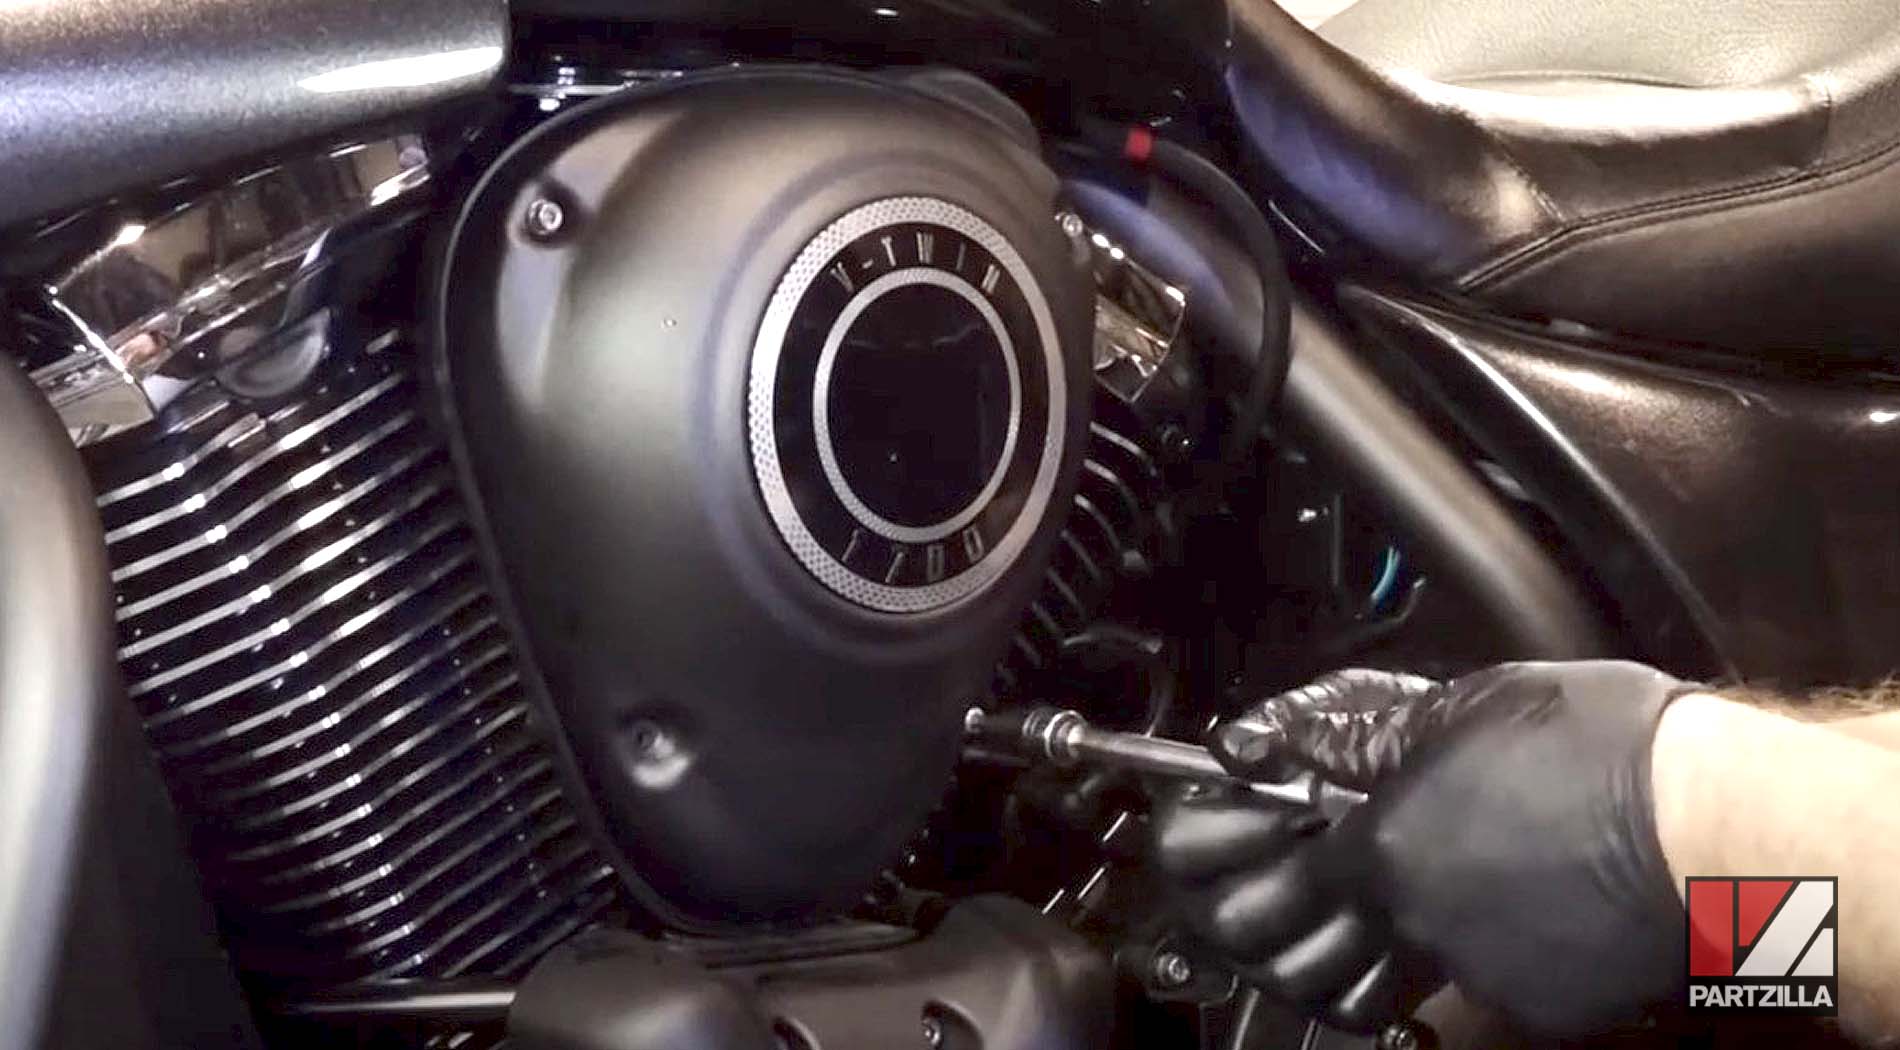 Motorcycle air filter change